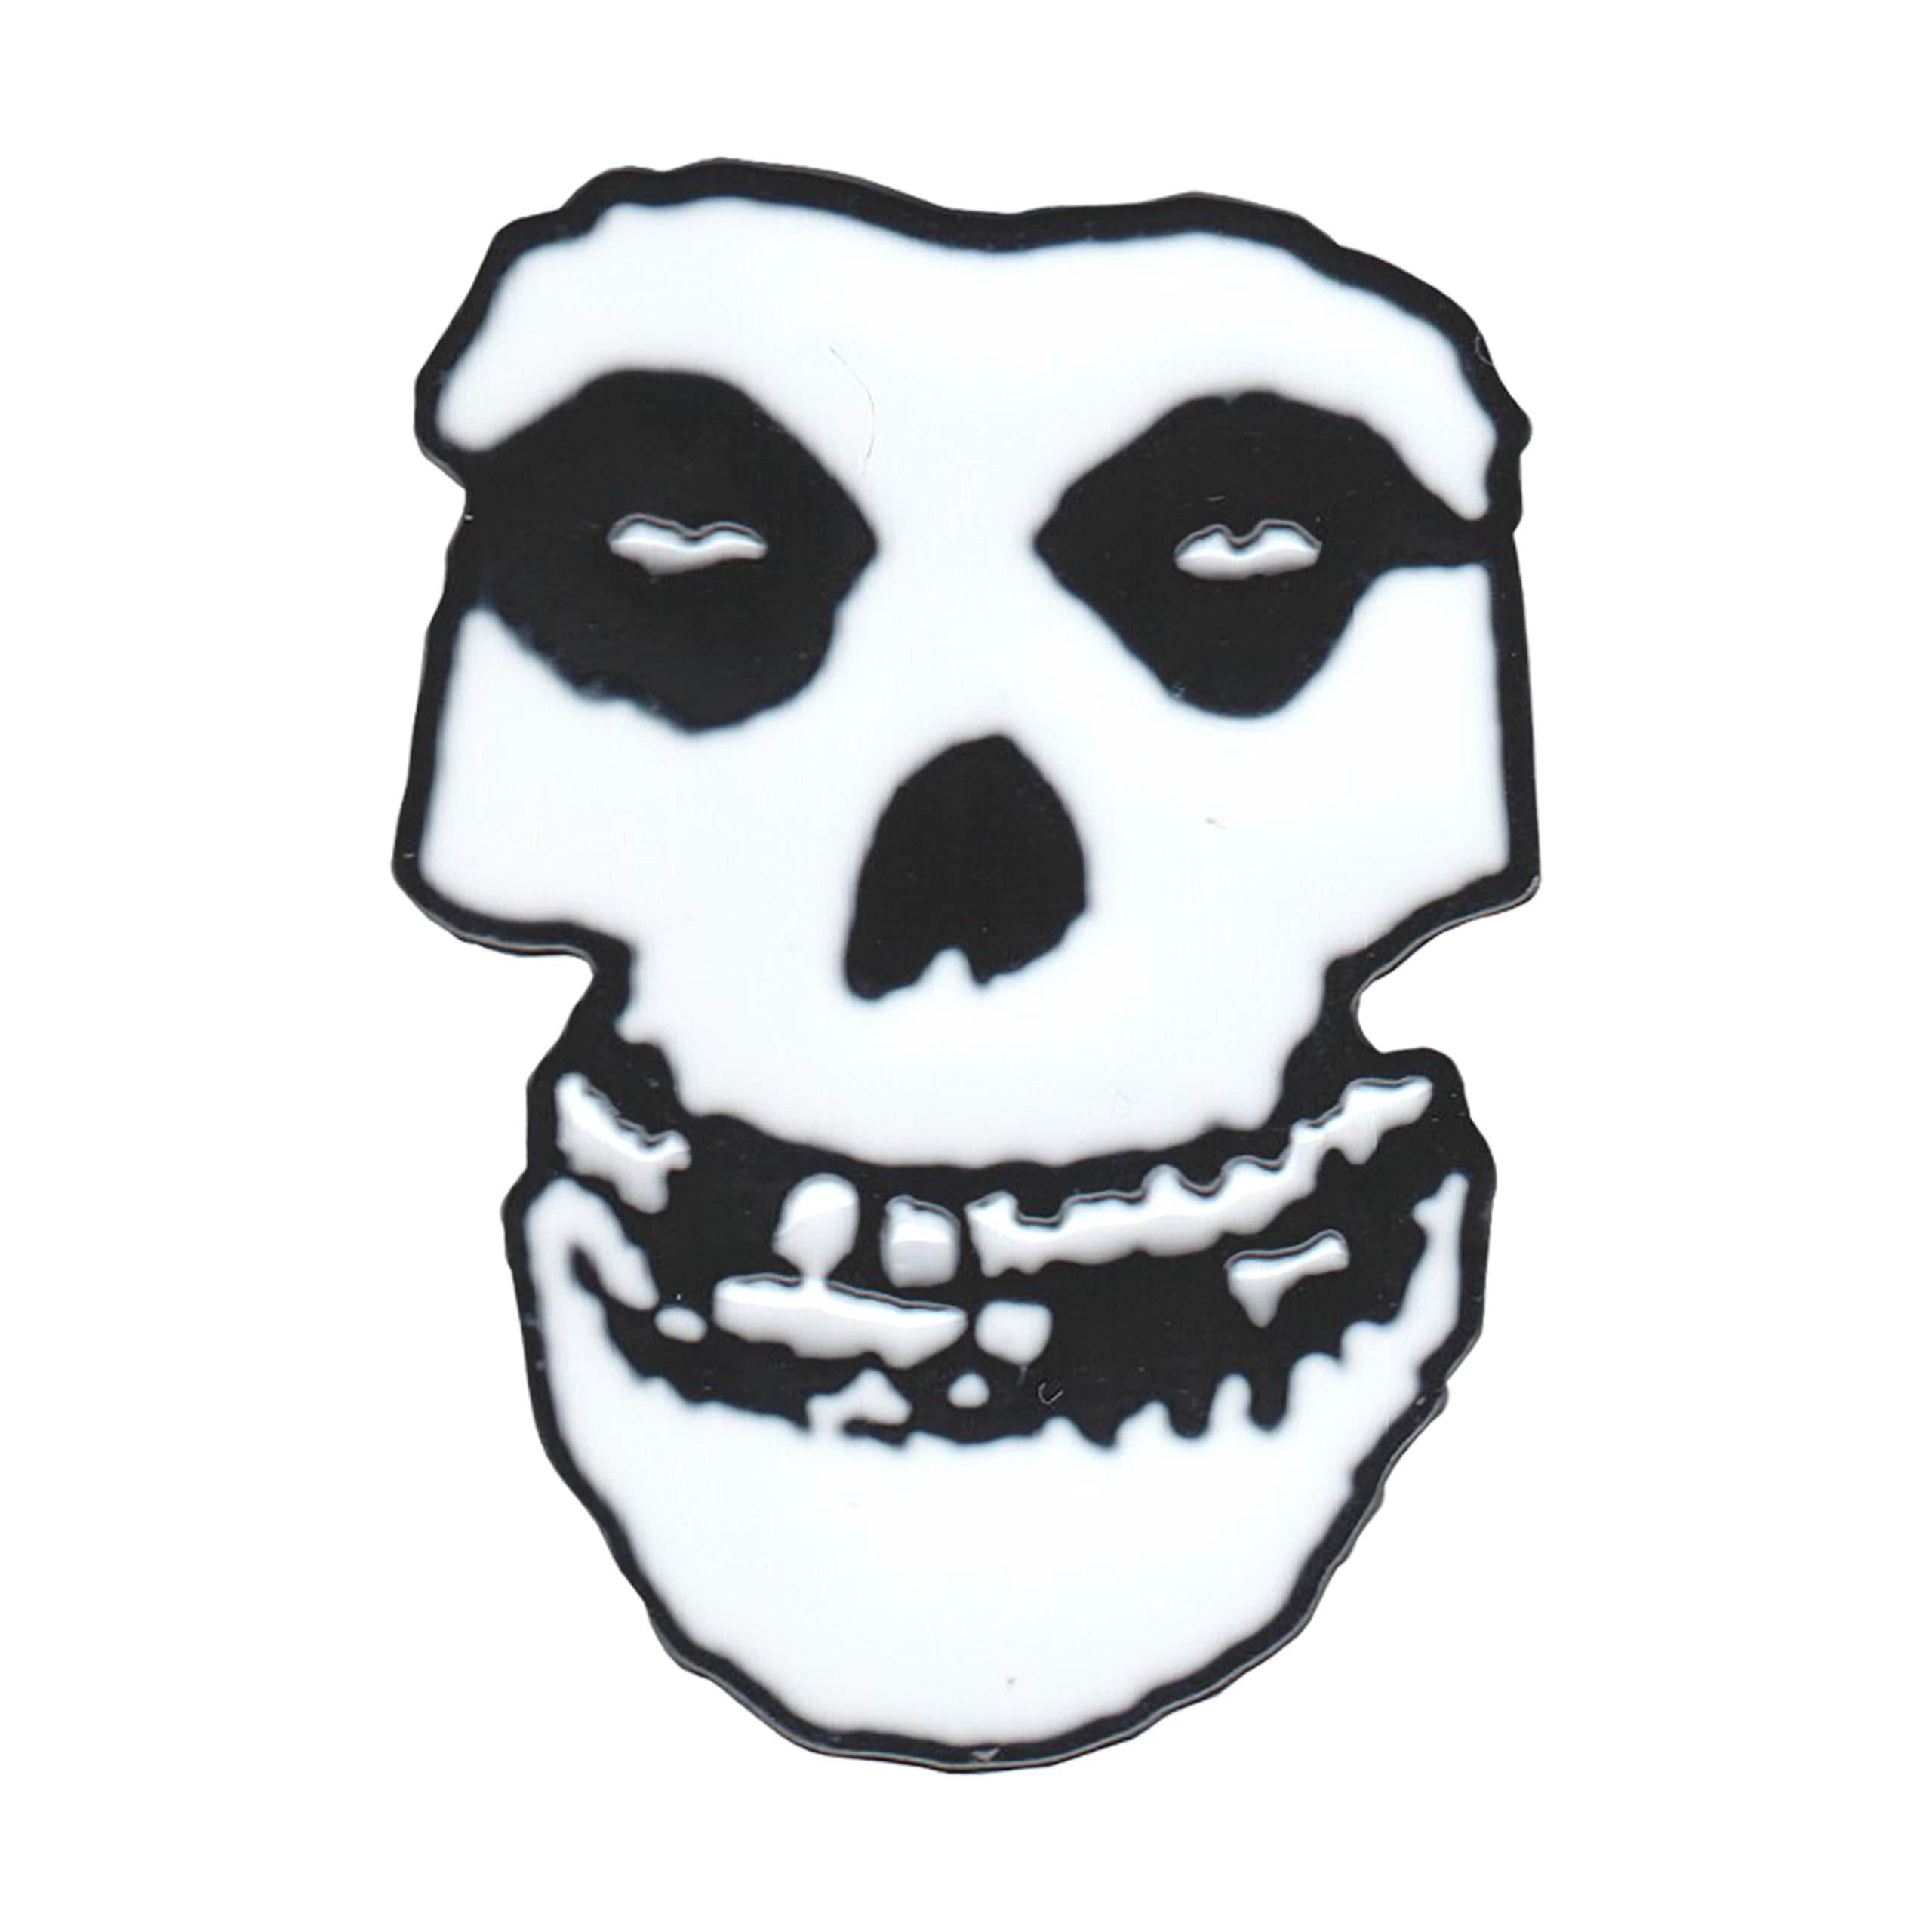 C&D Visionary Misfits Skull 1.25 Inch Metal Lapel Pin, Black, White